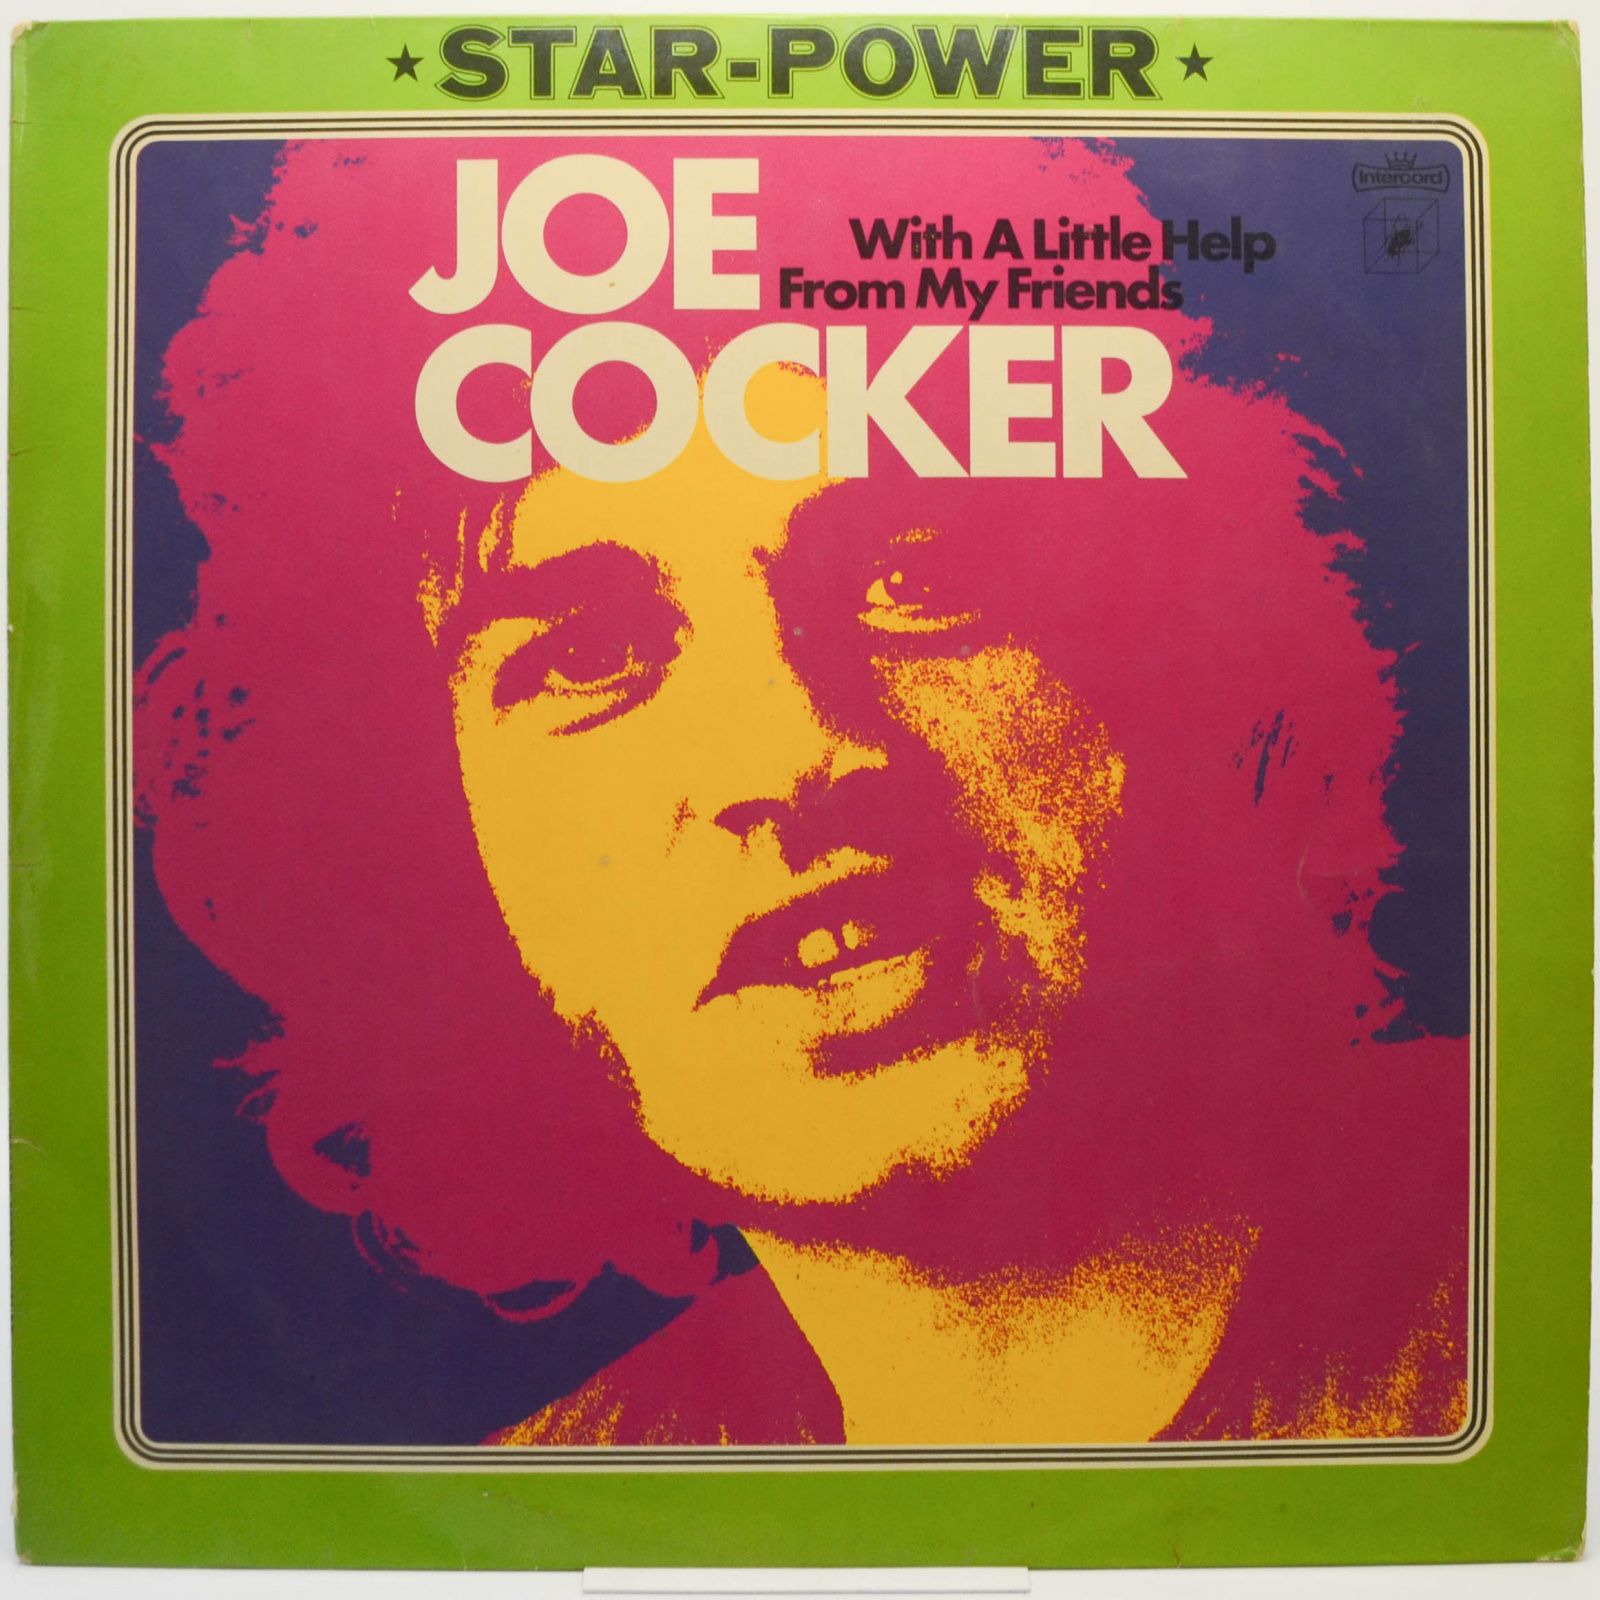 Joe Cocker — With A Little Help From My Friends, 1969